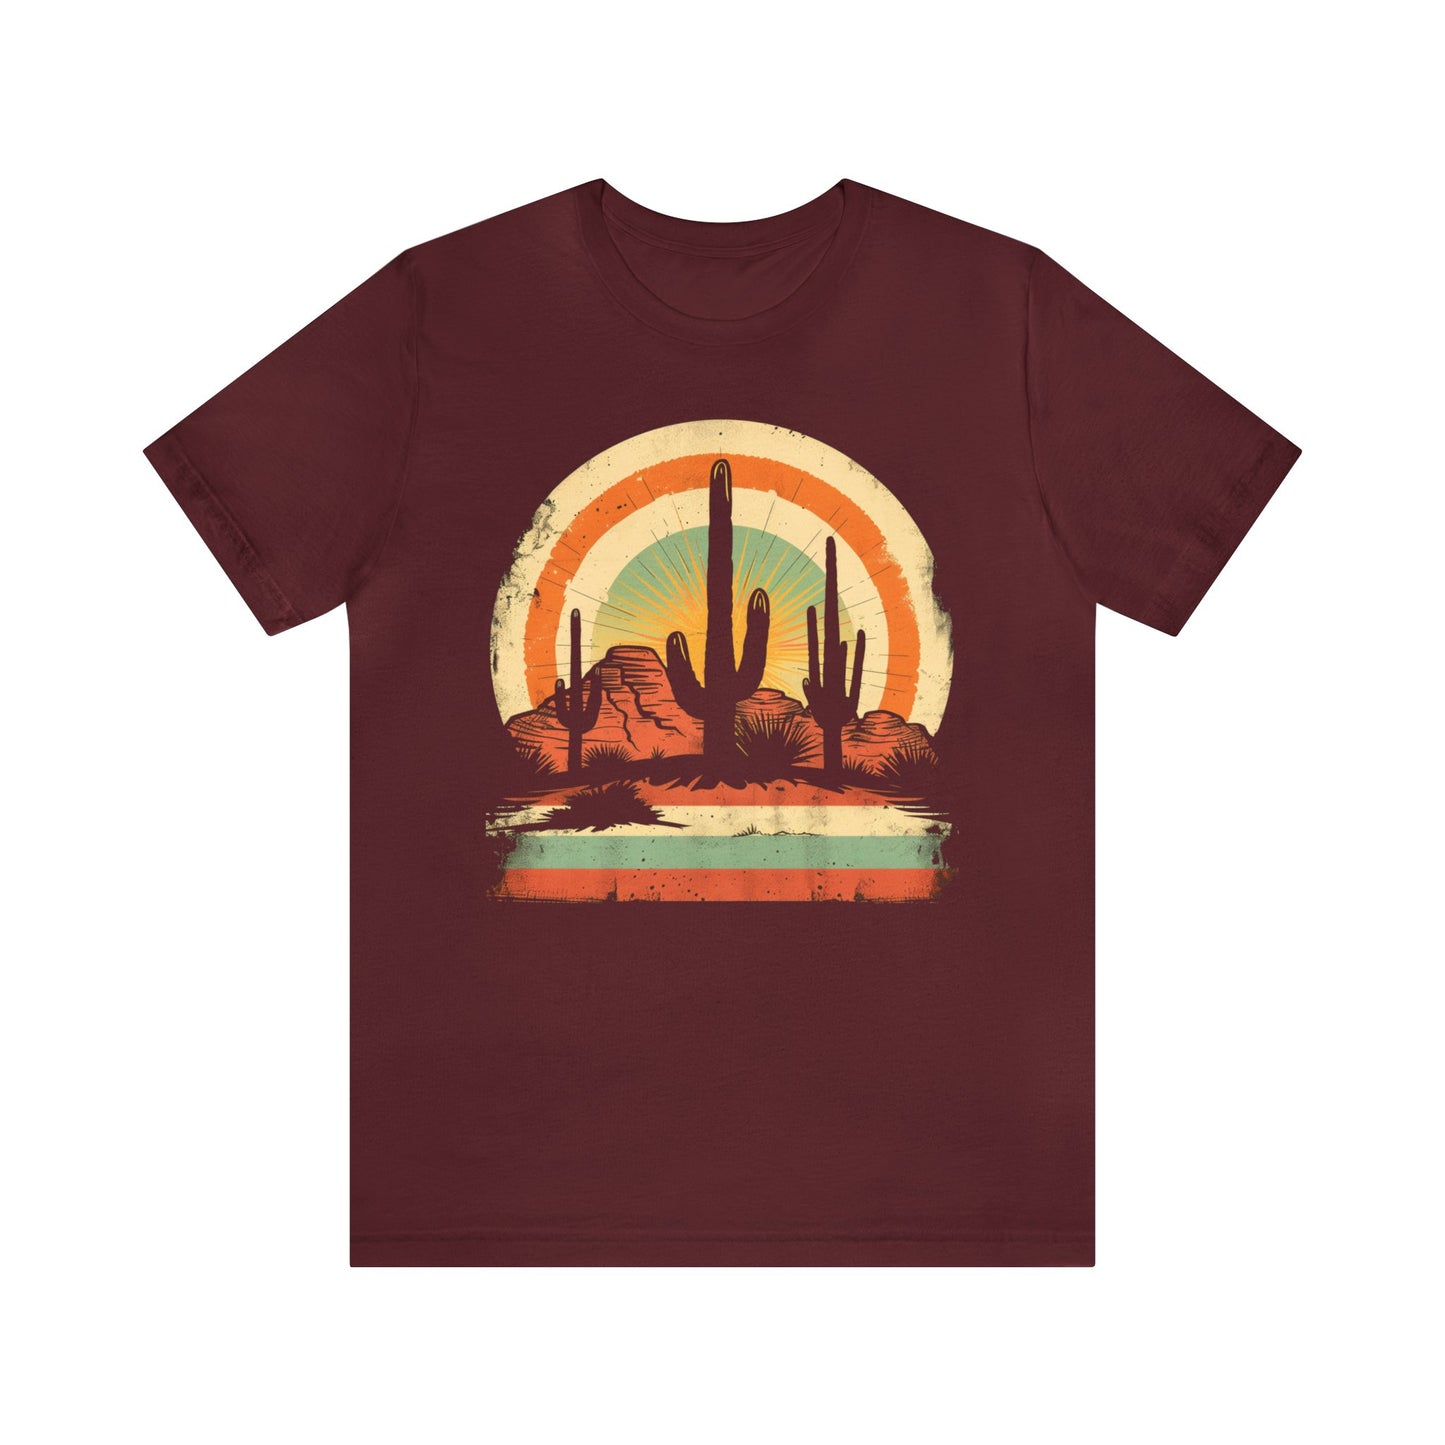 Cactus Desert Tshirt, Rising Sun 70s Western Retro Designer Graphic Aesthetic Crewneck Men Women Tee Top Short Sleeve Shirt